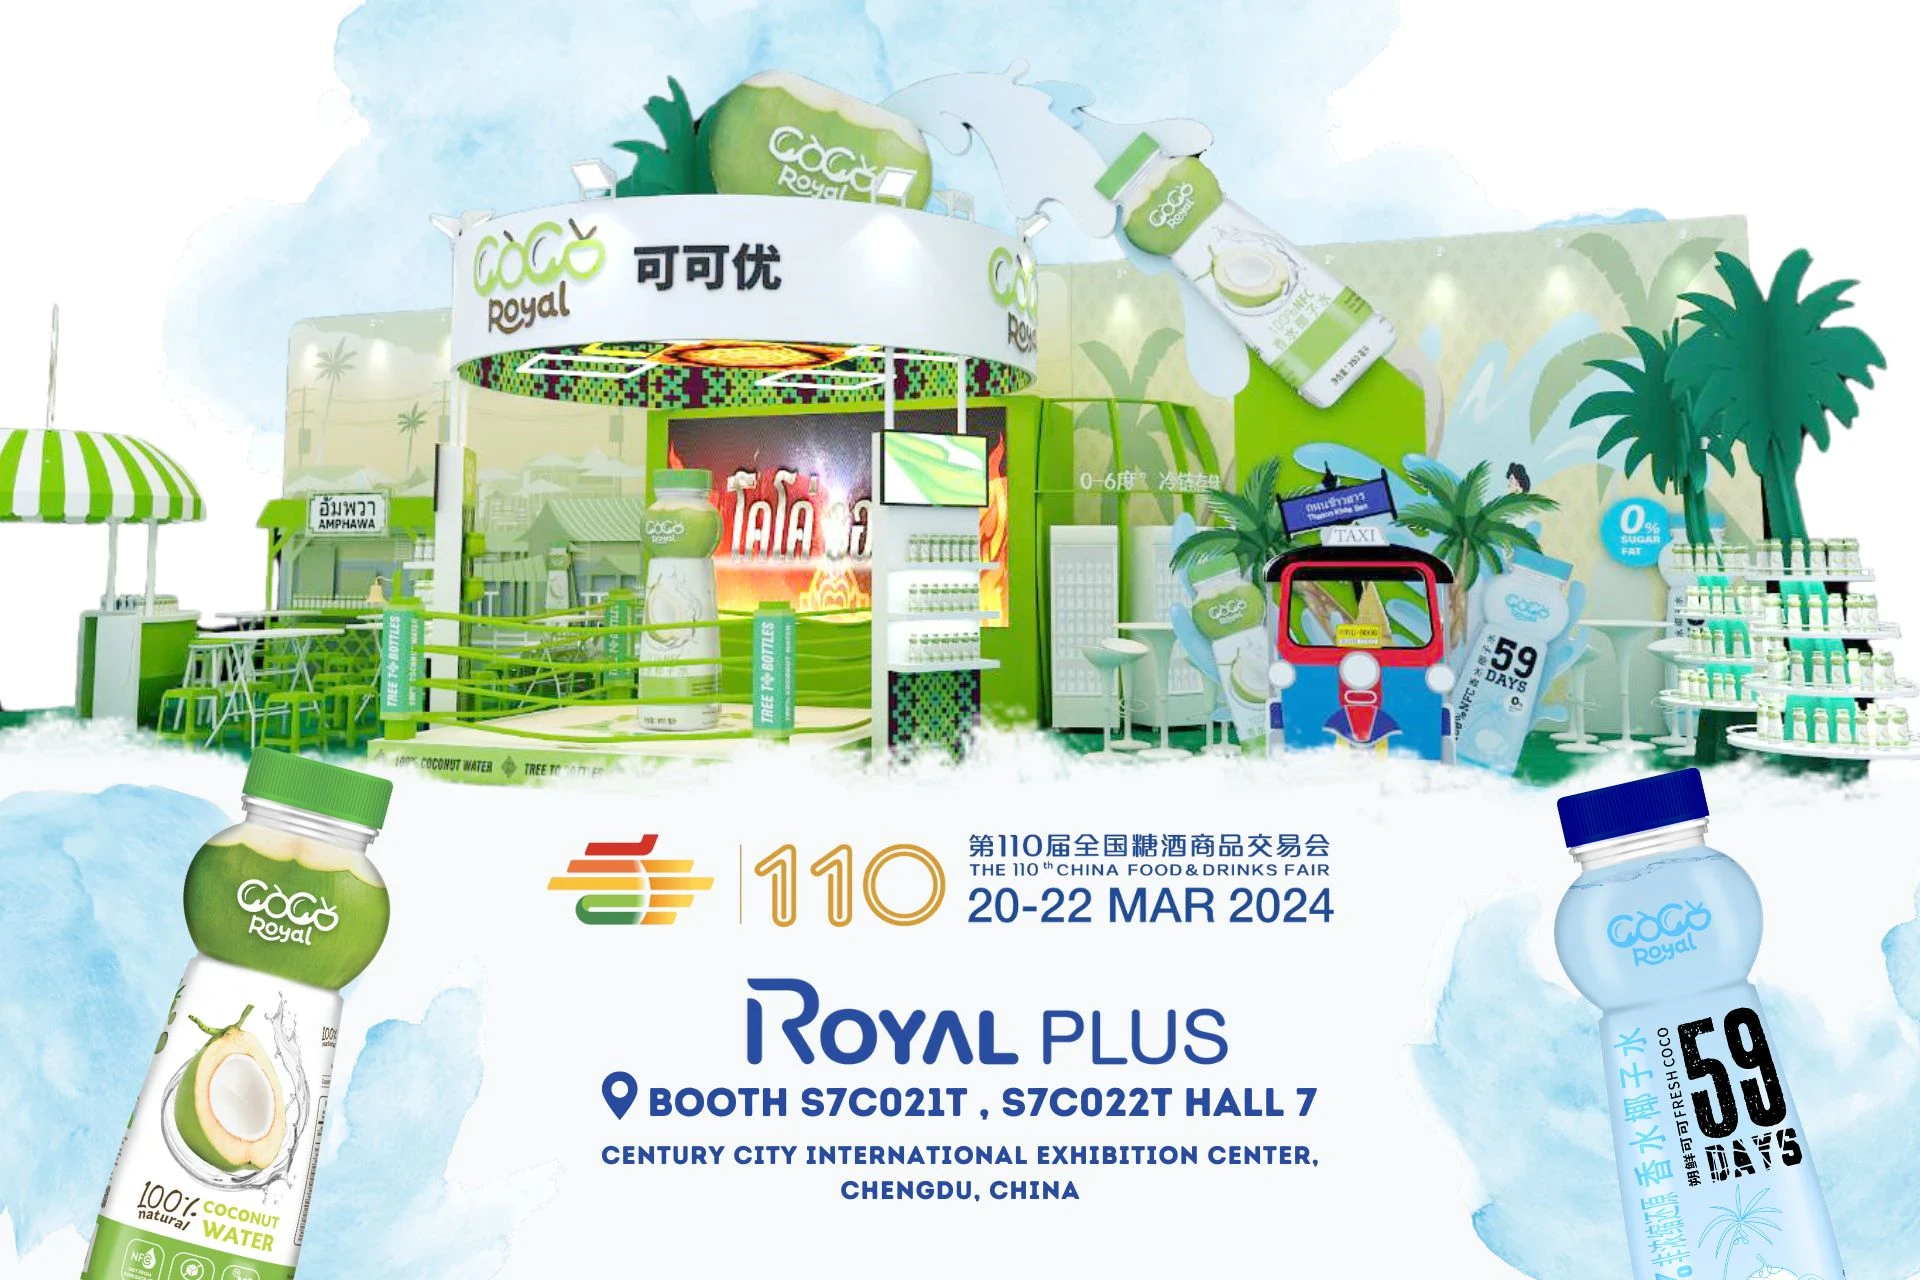 Royal Plus ผนึกกำลังพาร์ทเนอร์สุดแกร่งพา Coco Royal น้ำมะพร้าว 100% บุกตลาดจีนที่งาน China Food & Drink Fair ครั้งที่ 110 ณ เมืองเฉิงตู ประเทศจีน